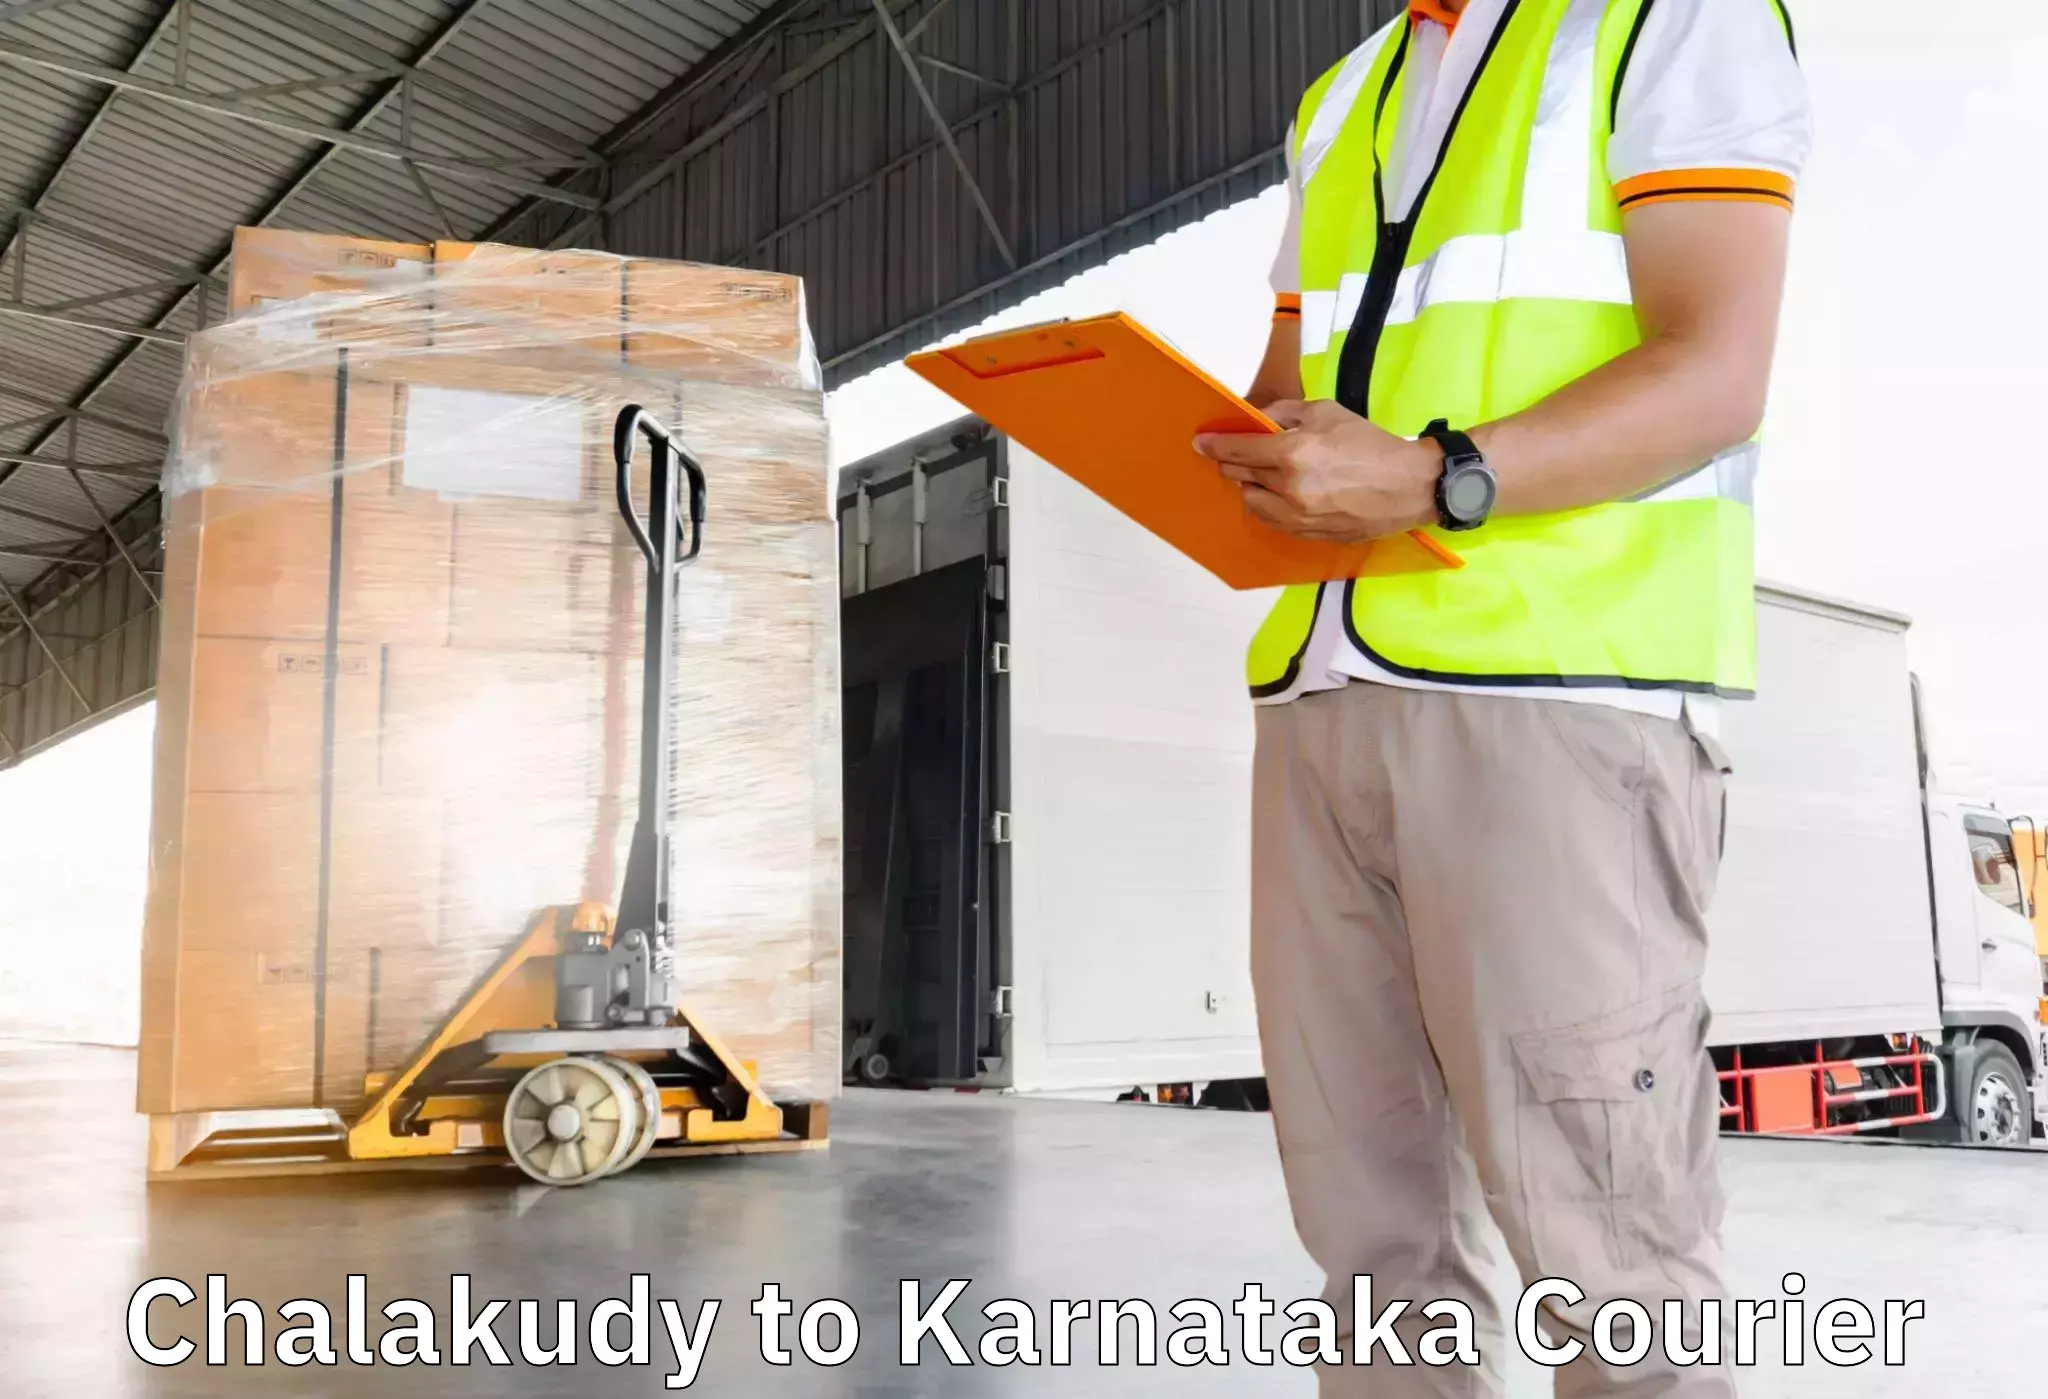 Furniture transport specialists Chalakudy to Karnataka